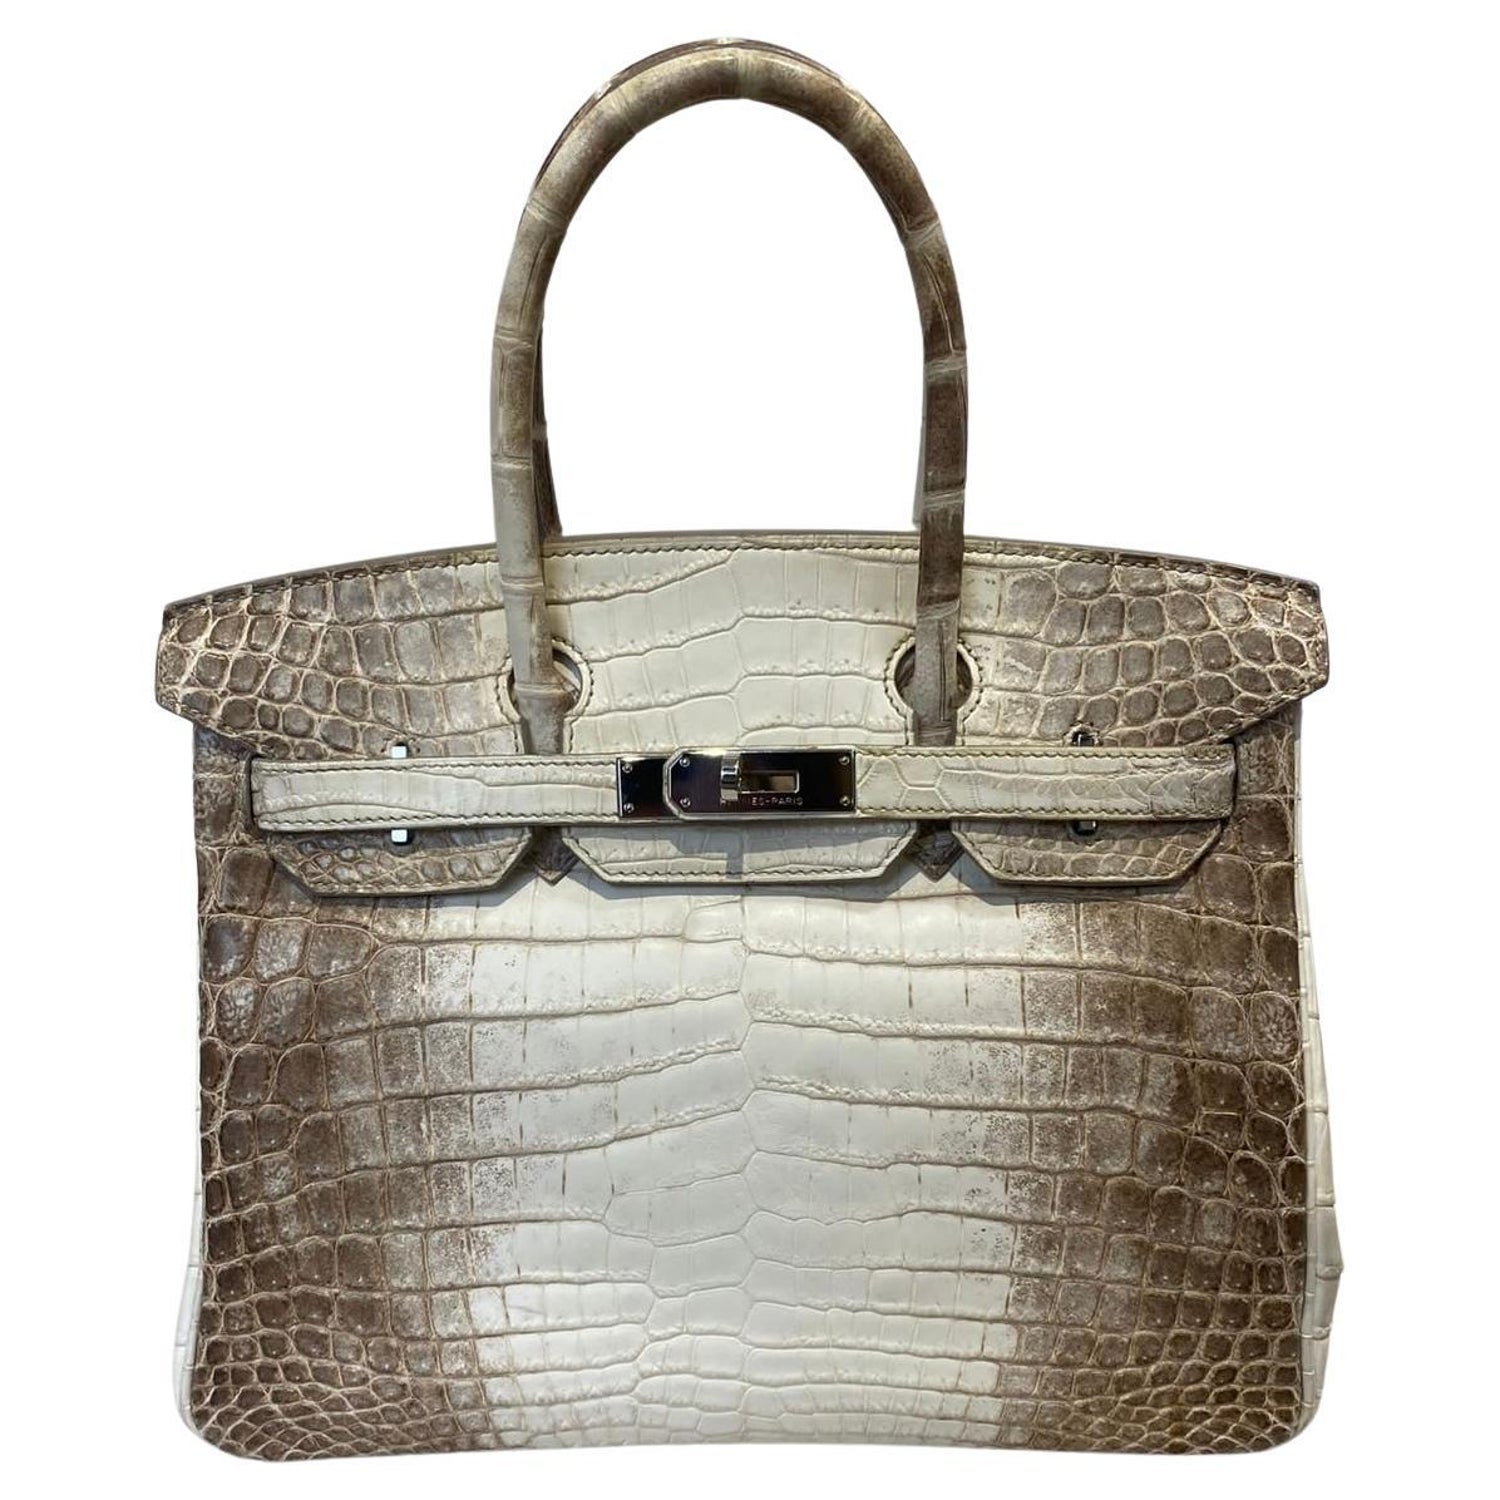 Investing in fashion: Is a $150,000 Hermès Birkin bag worth the